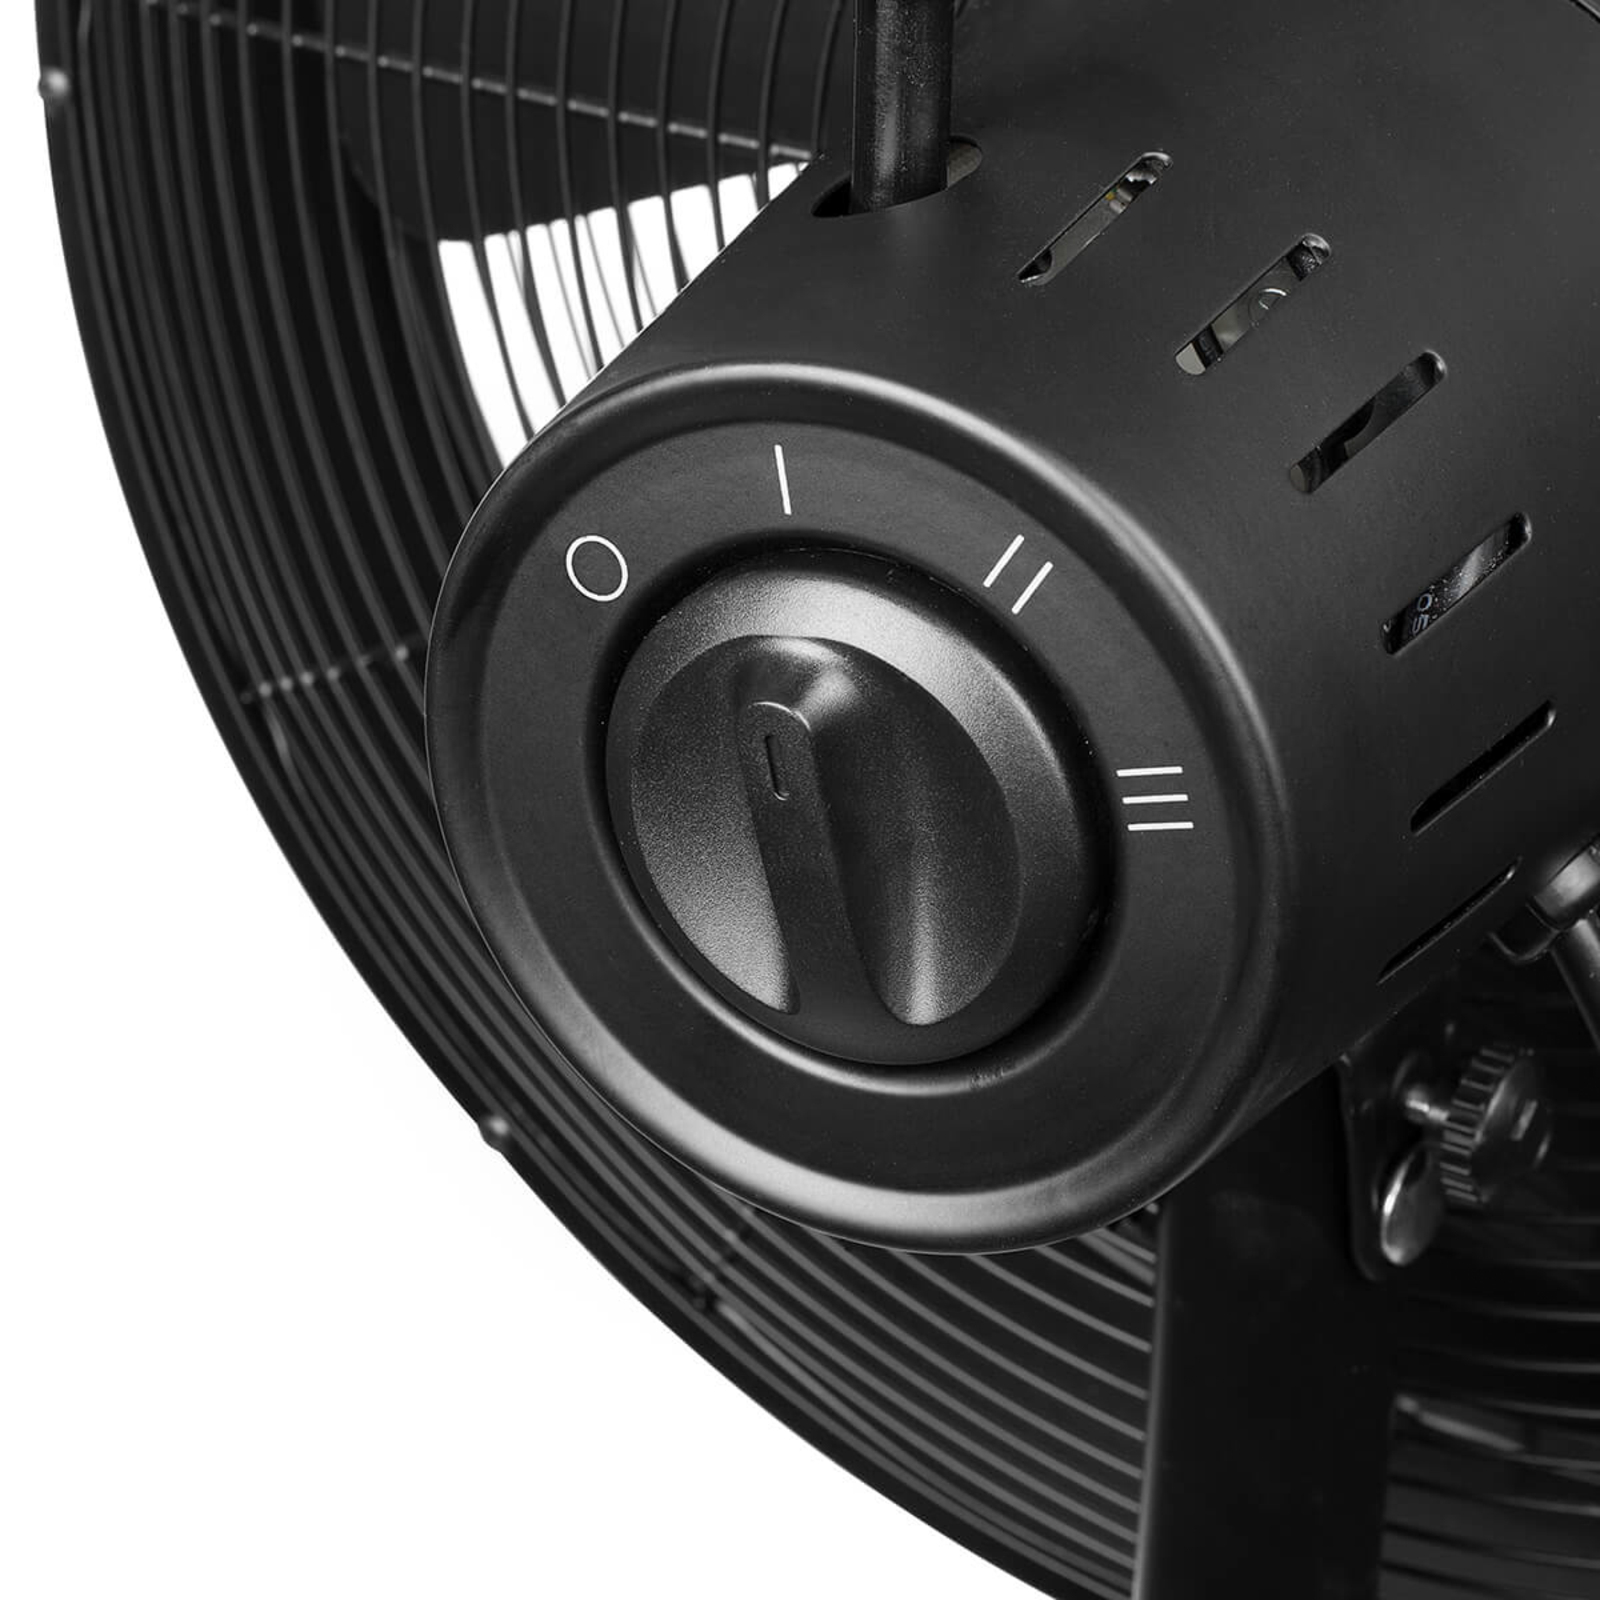 Moderne staande ventilator VE5929 in zwart